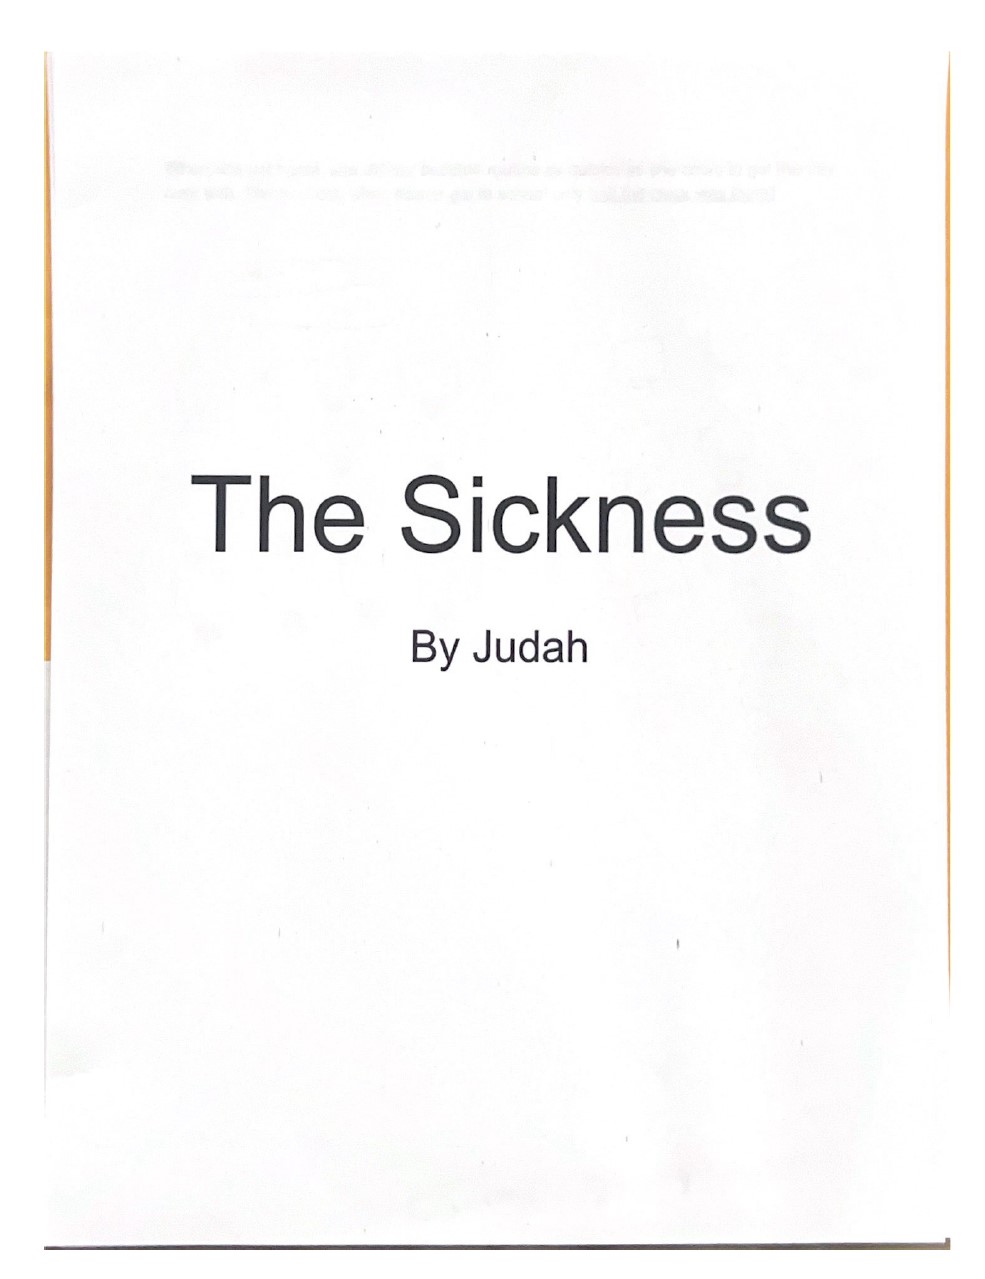 The Sickness by Judah